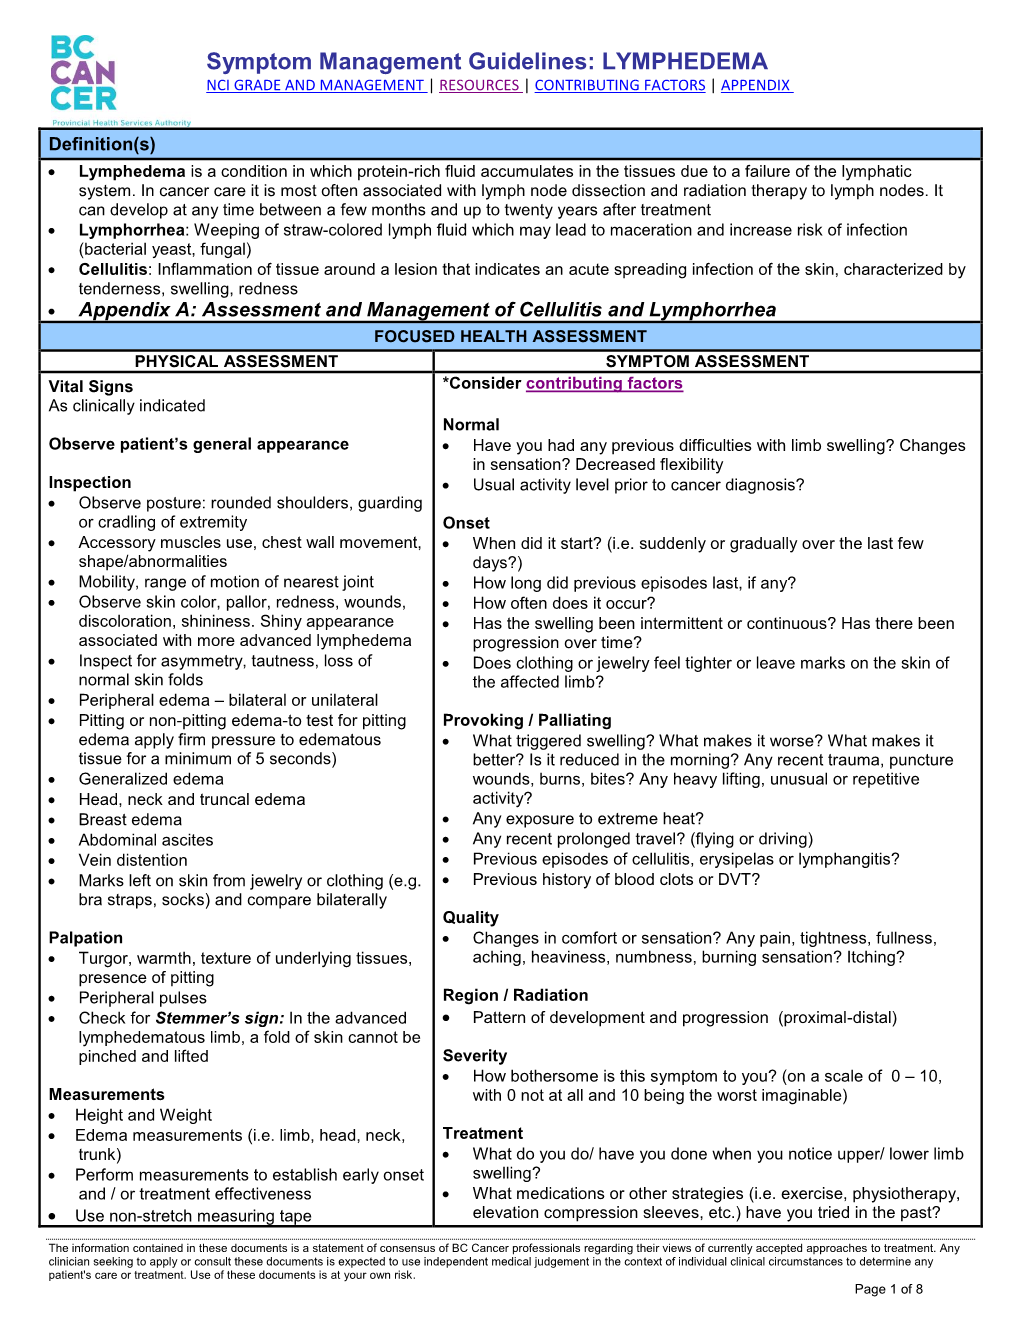 Symptom Management Guidelines: LYMPHEDEMA NCI GRADE and MANAGEMENT | RESOURCES | CONTRIBUTING FACTORS | APPENDIX